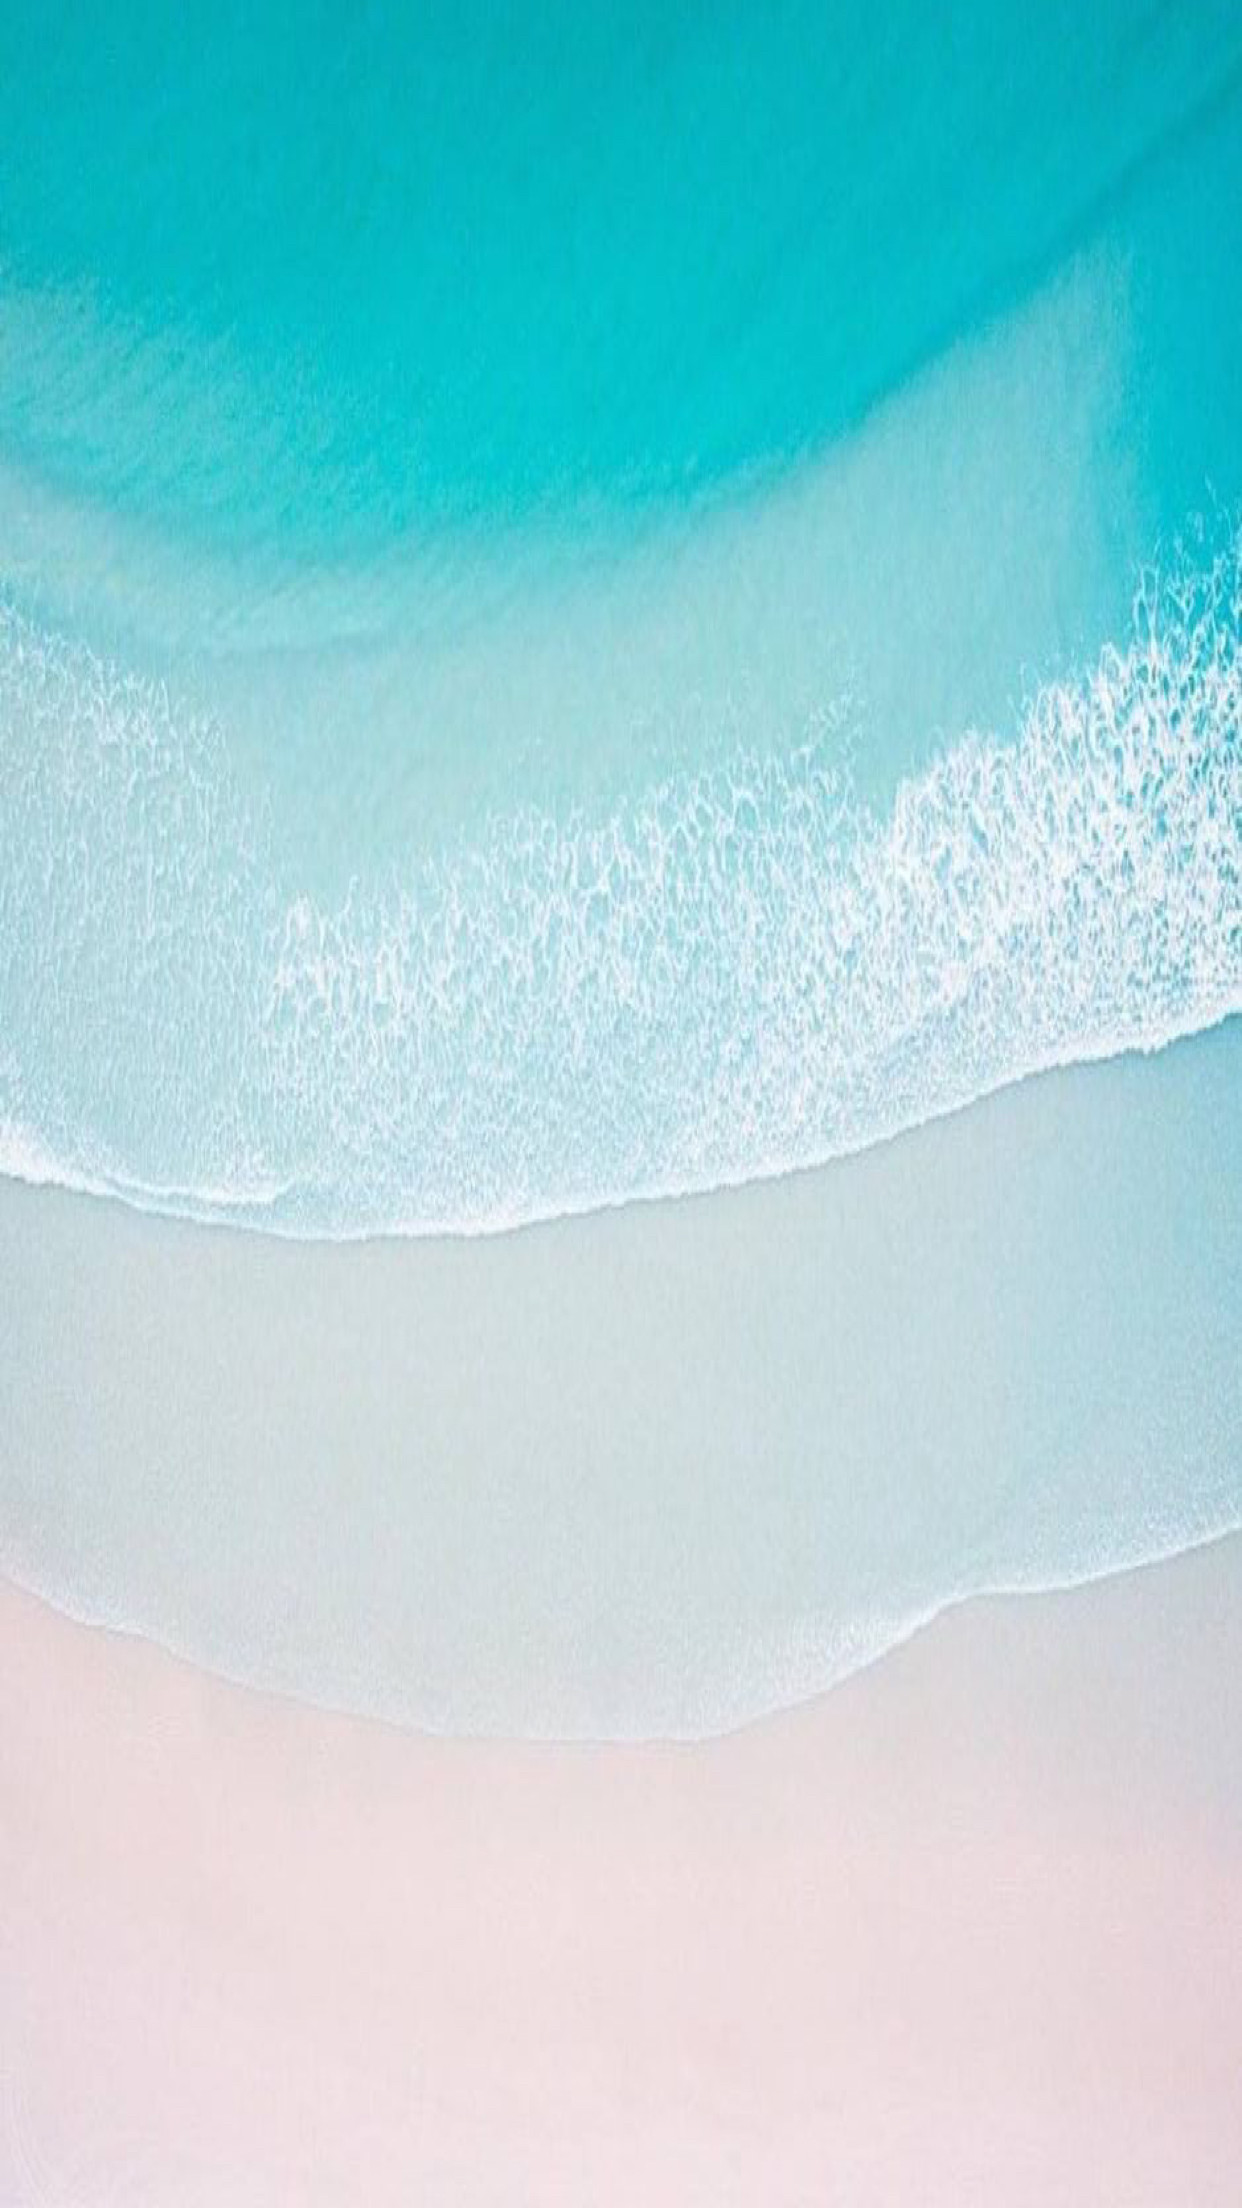 iOS 11, Turquoise, sand, beach, ocean, abstract, apple, wallpaper